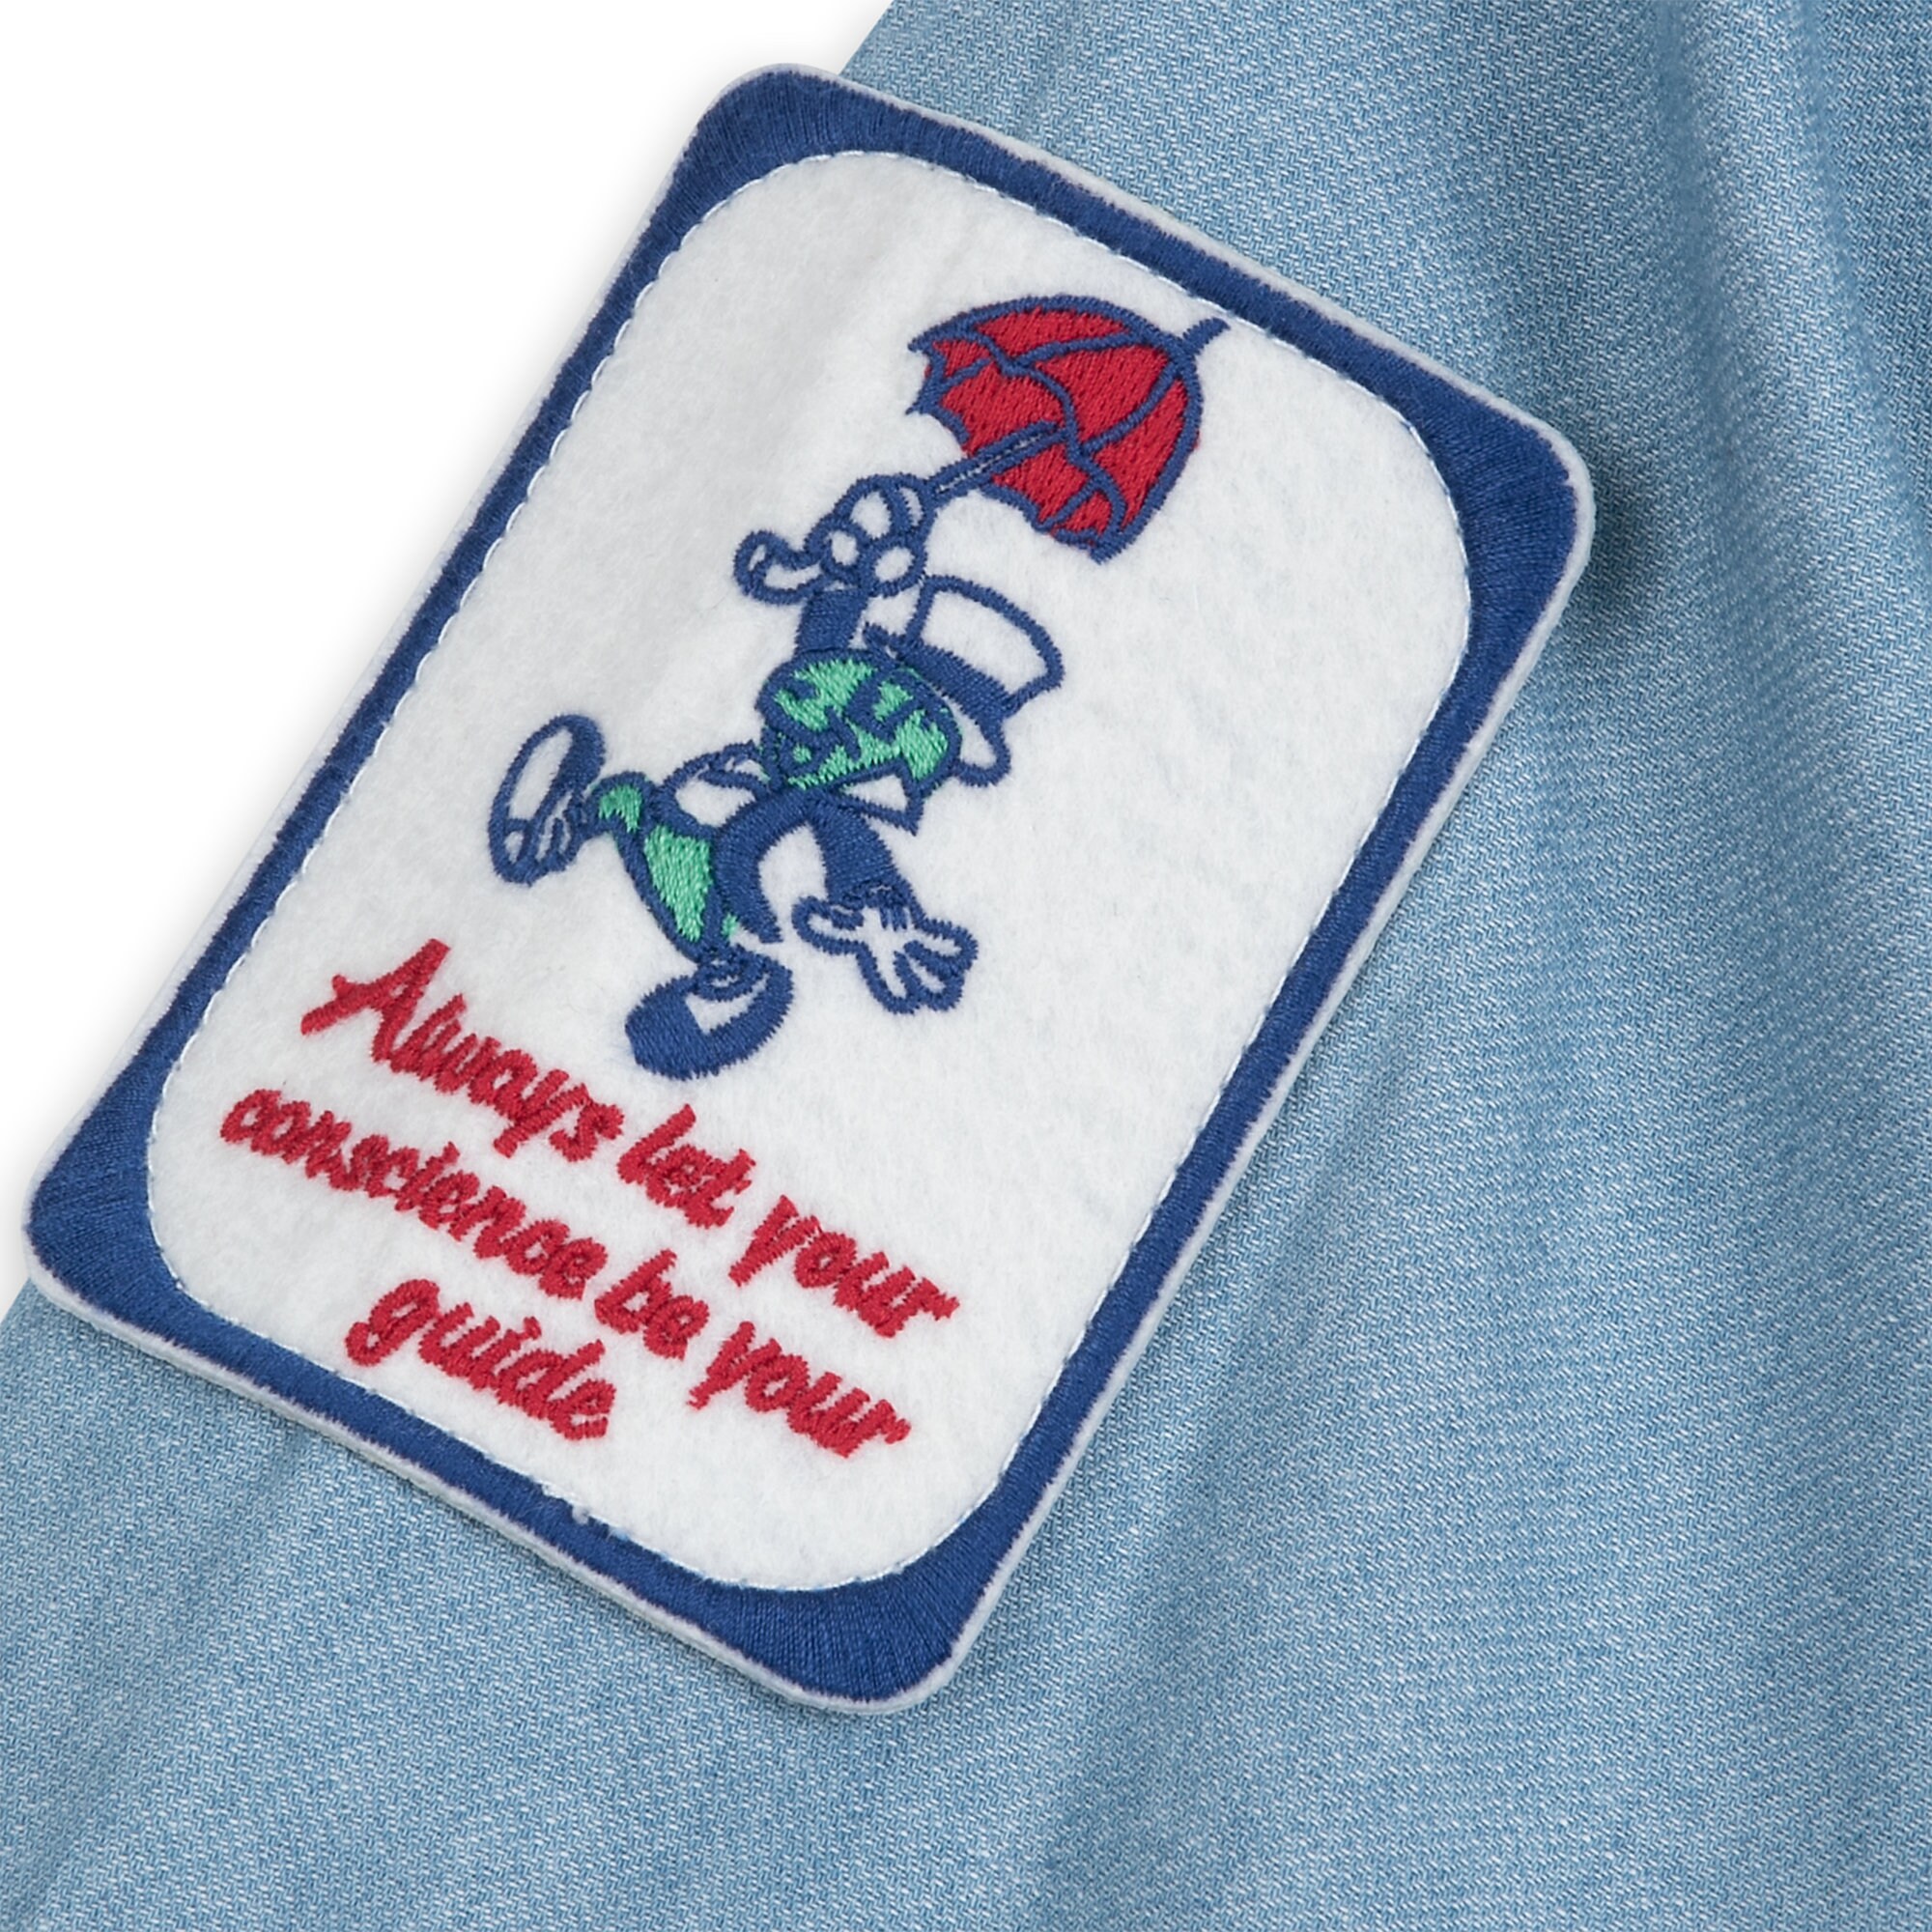 Jiminy Cricket Chambray Shirt for Men by Junk Food